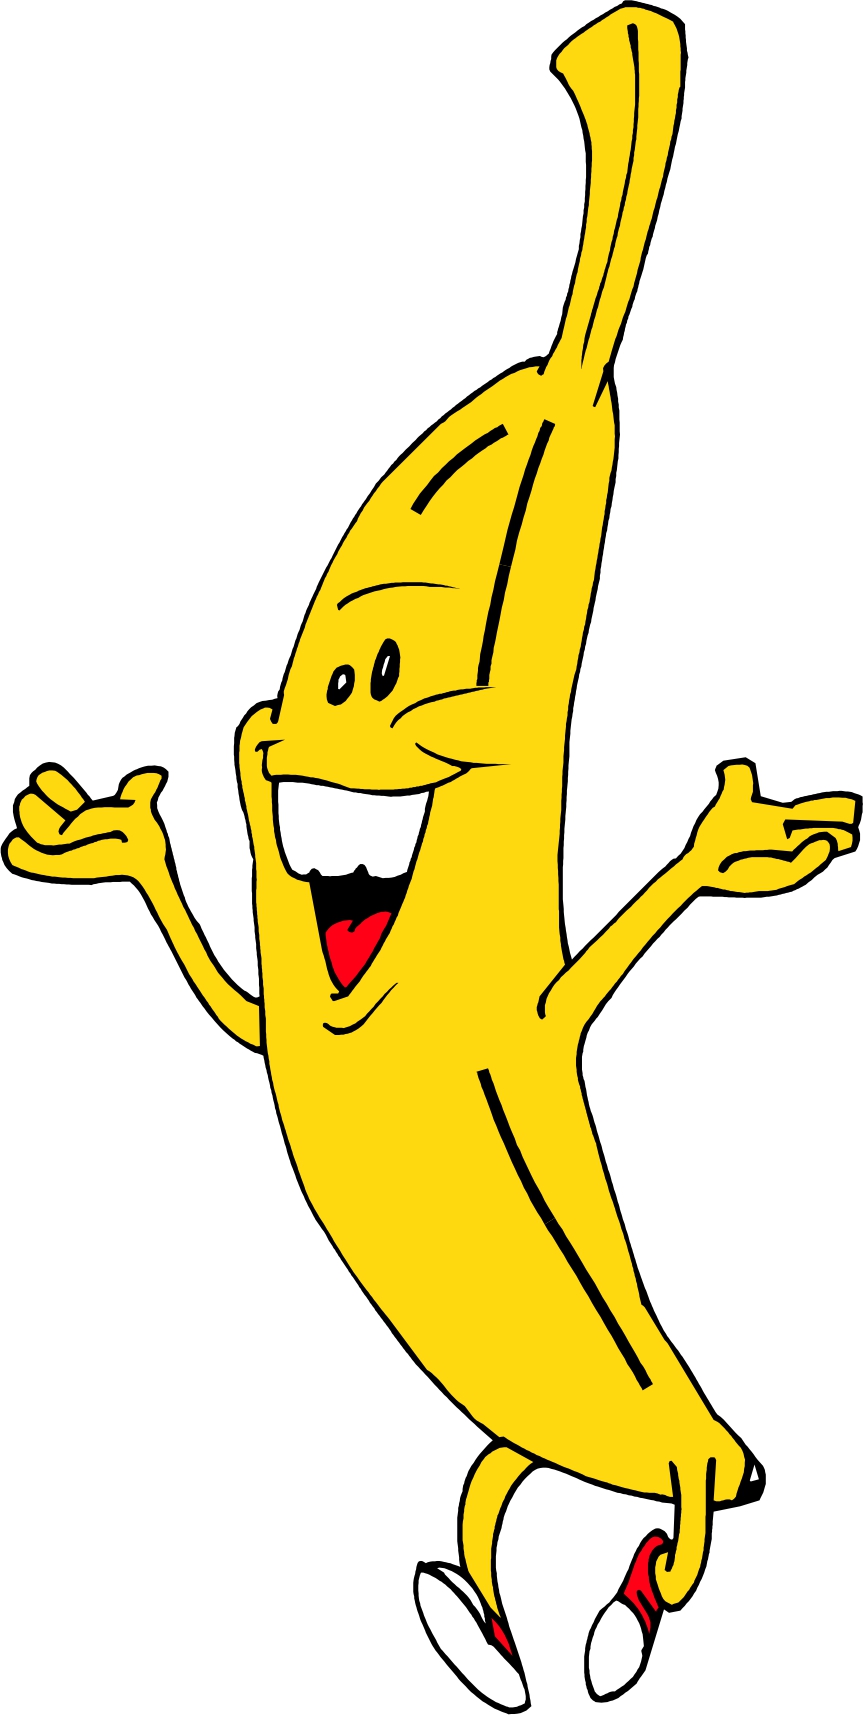 Cartoon Pictures of Bananas: Fun and Creative Artwork